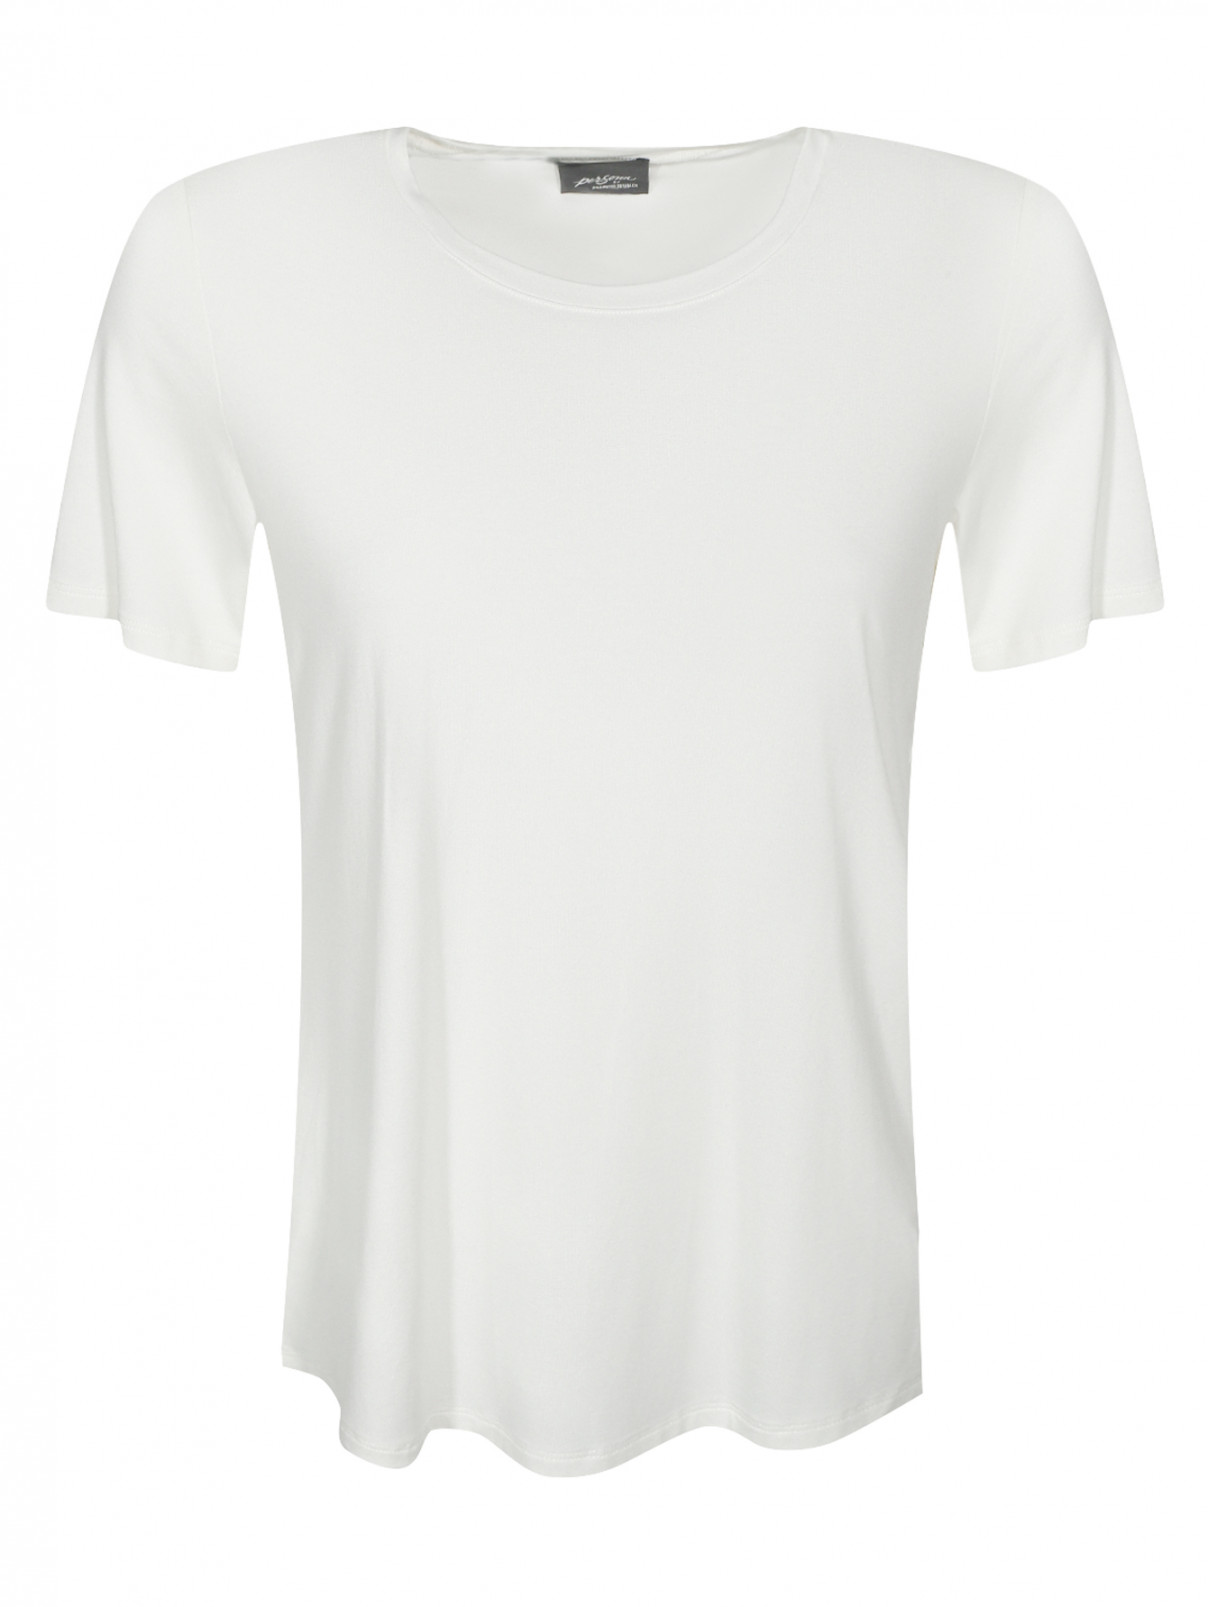 Базовая футболка с короткими рукавами Persona by Marina Rinaldi  –  Общий вид  – Цвет:  Белый